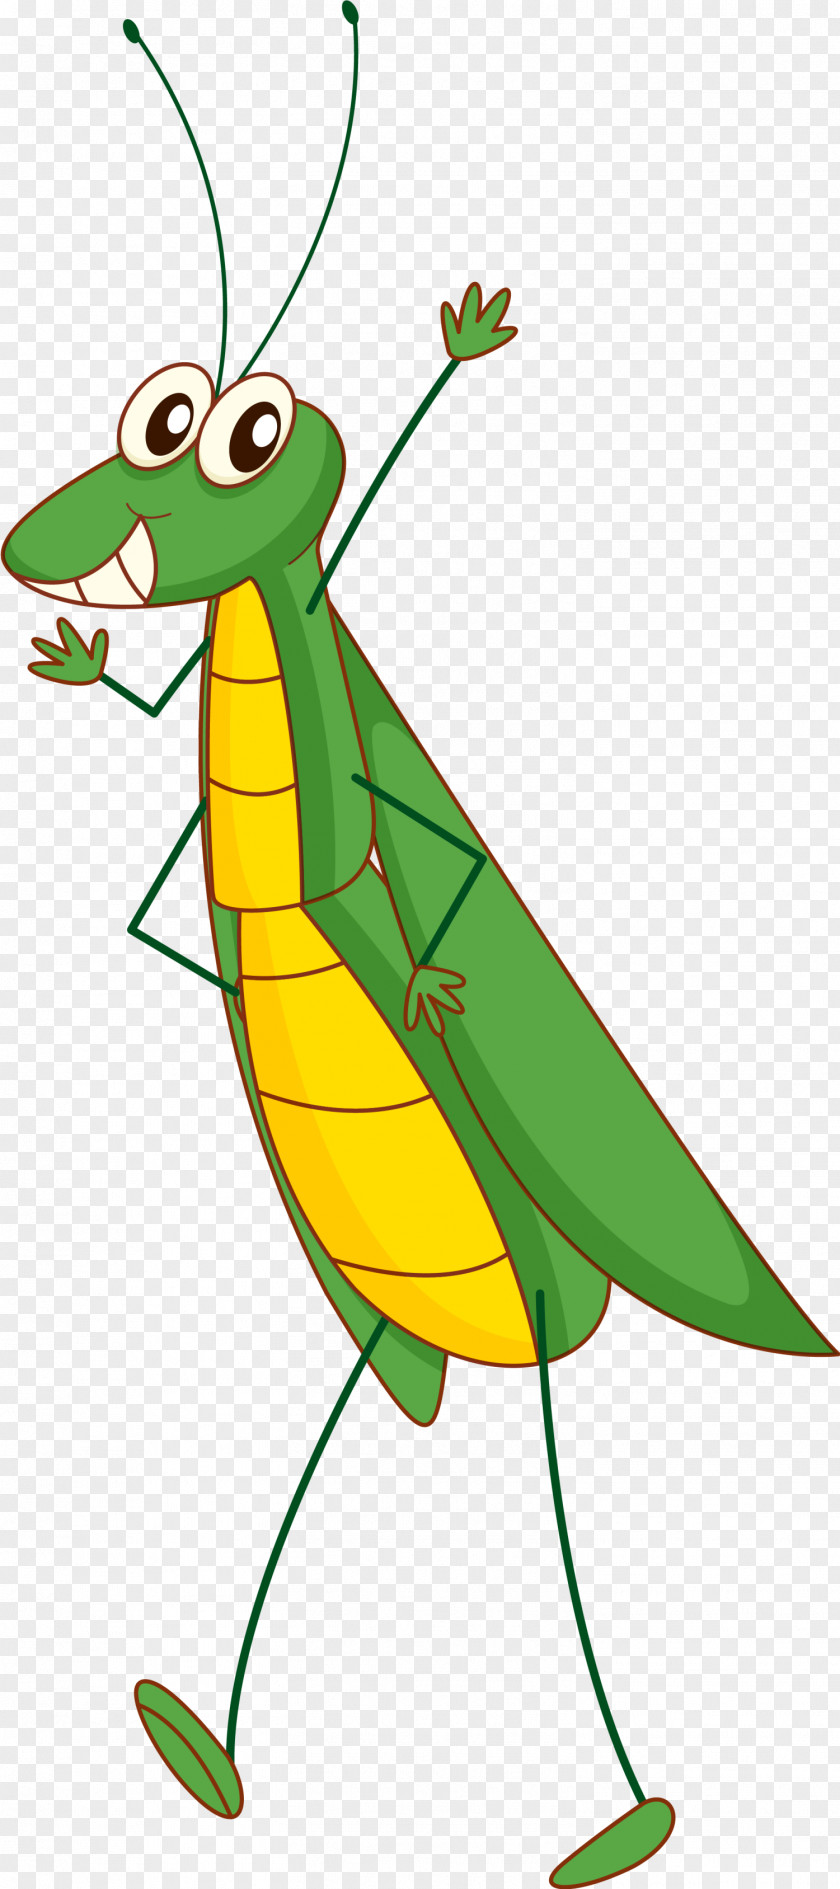 Cartoon Green Grasshopper Insect Clip Art PNG